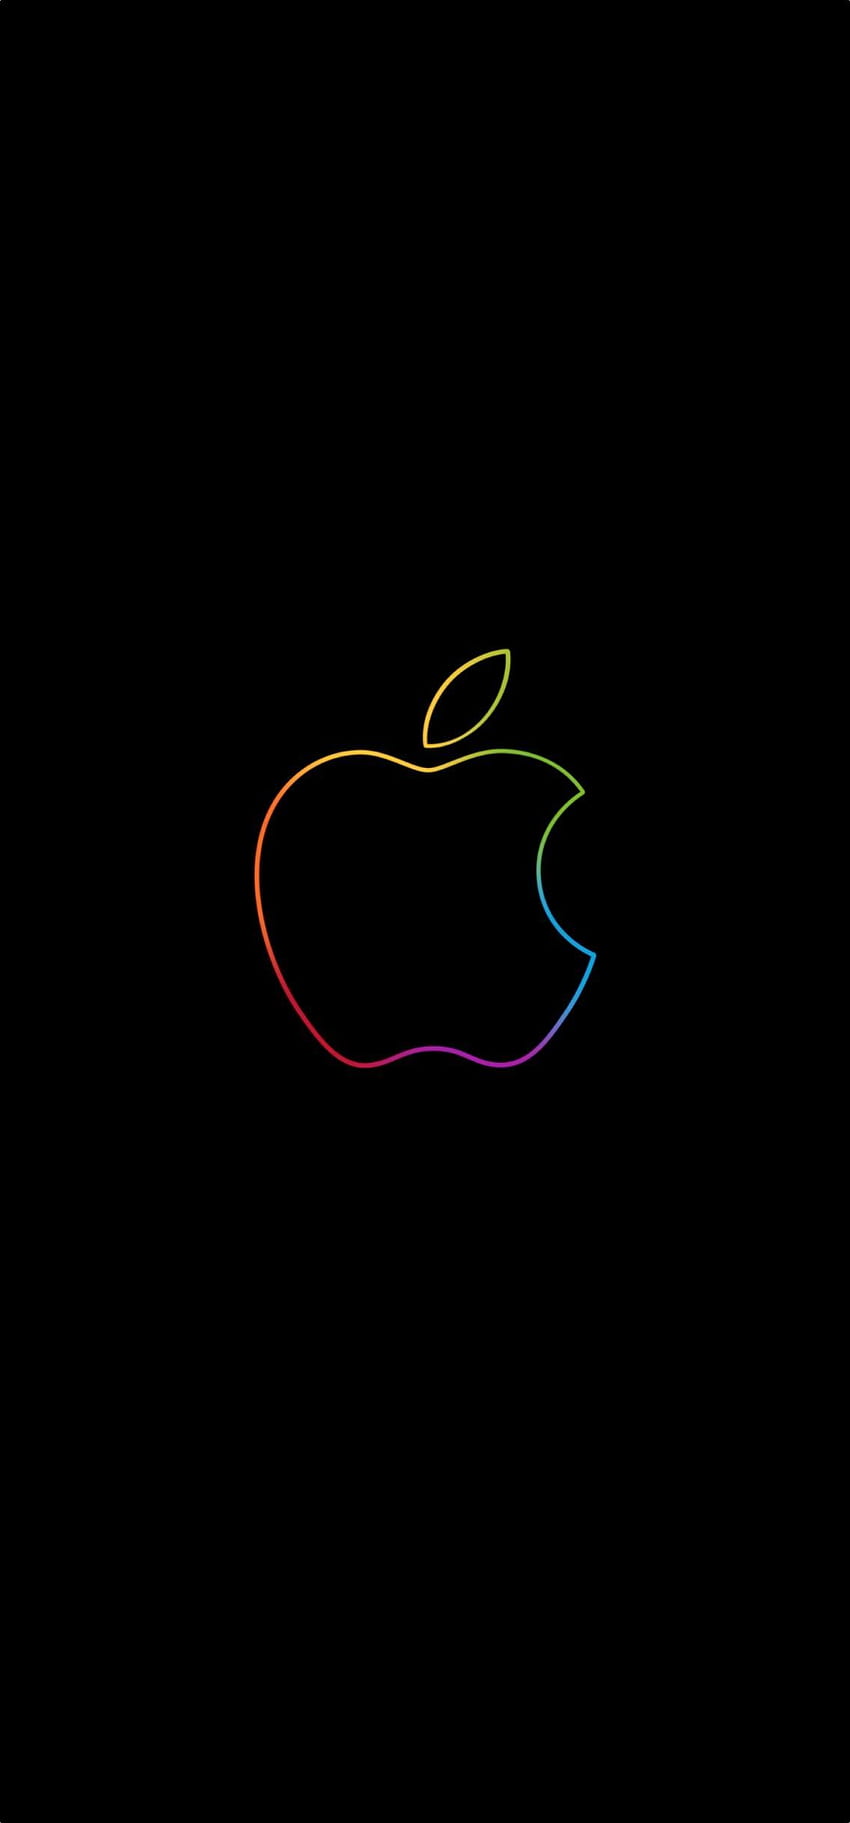 Logotipo de Apple iPhone 12. iPhone 12 Pro máx. iPhone 12. iPhone. iPad. Mamá. Logotipo de Apple iPhone, Apple , Logotipo de Apple , Logotipo original de Apple fondo de pantalla del teléfono